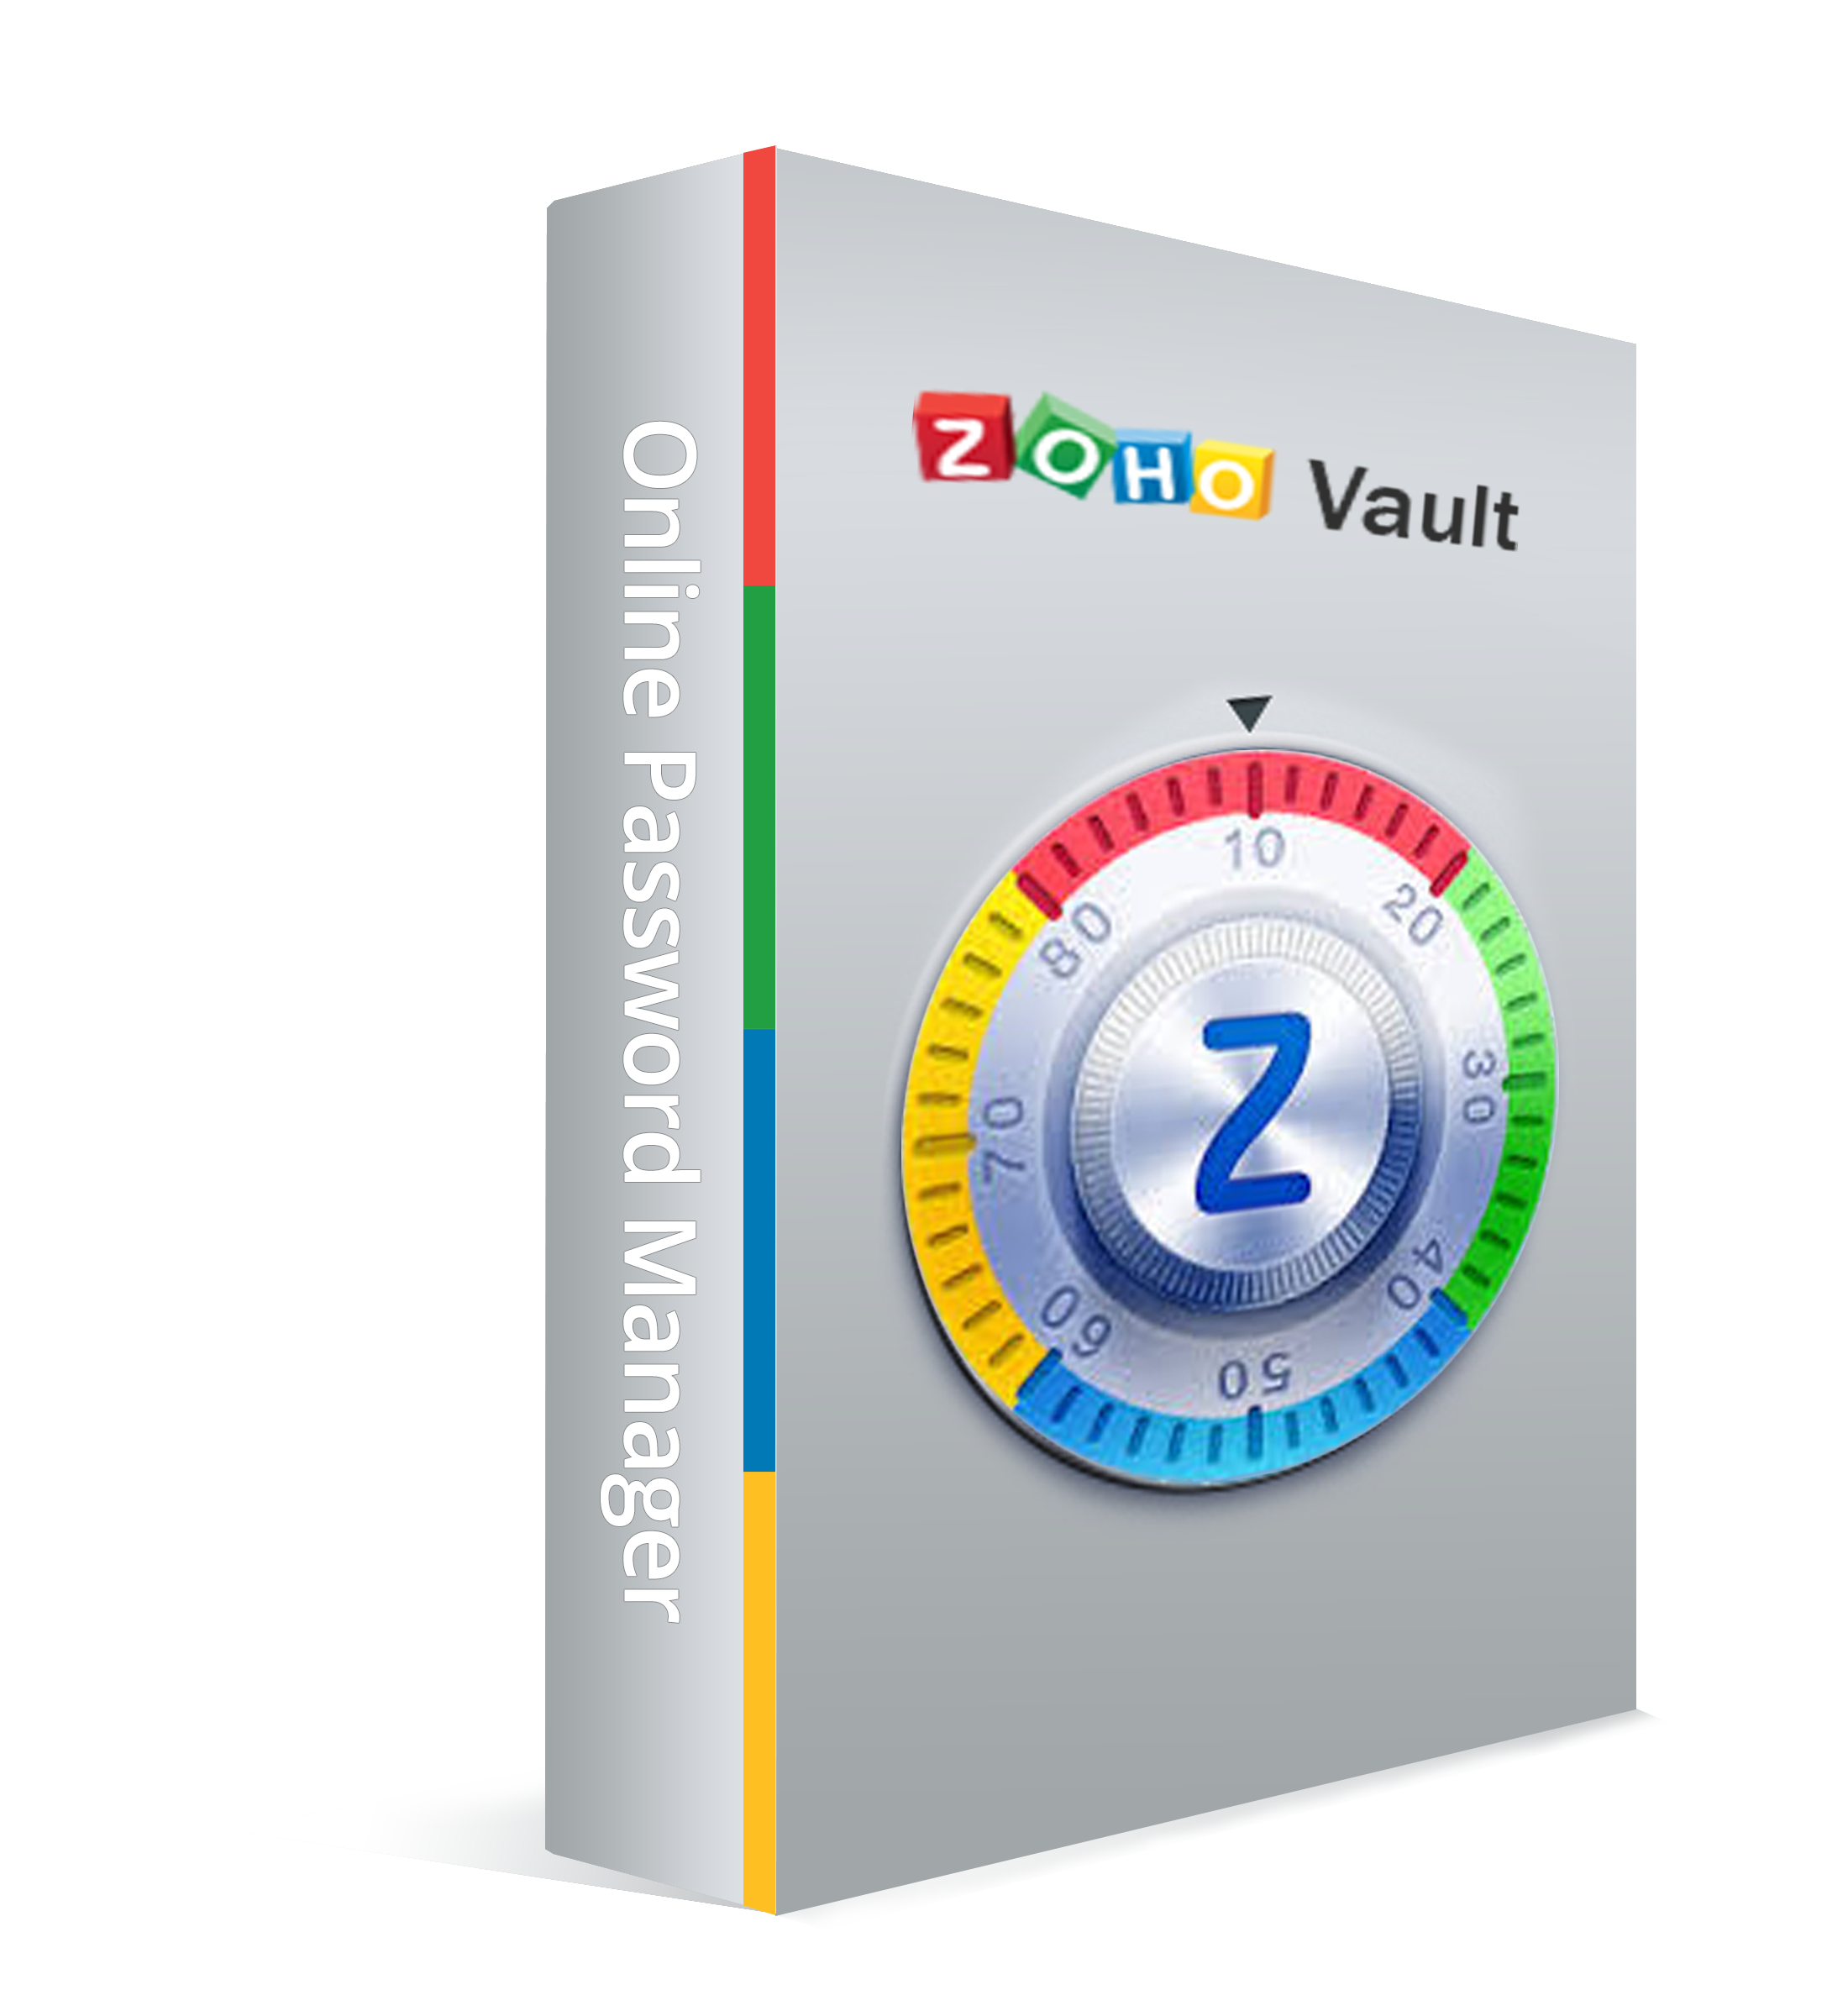 Free Zoho Vault (100% discount) - SharewareOnSale